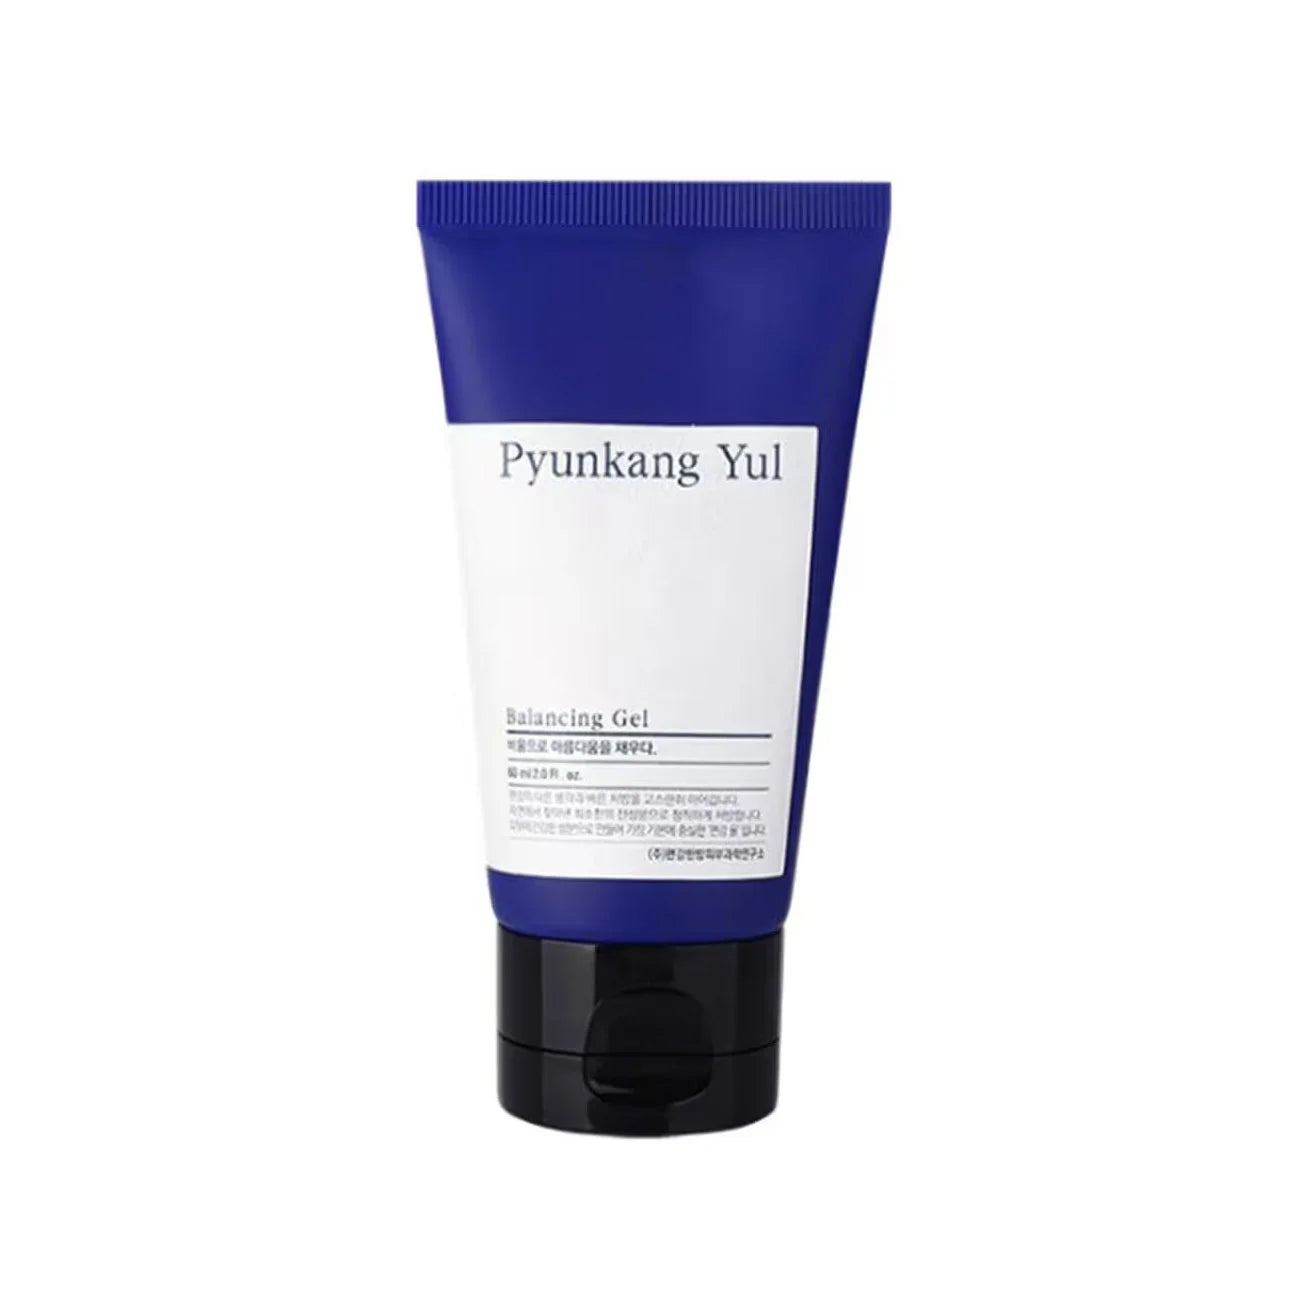 Pyunkang Yul Balancing Gel rich gentle facial moisturizer for dry dehydrated sensitive skin anti-aging fine lines sagging skin K Beauty World